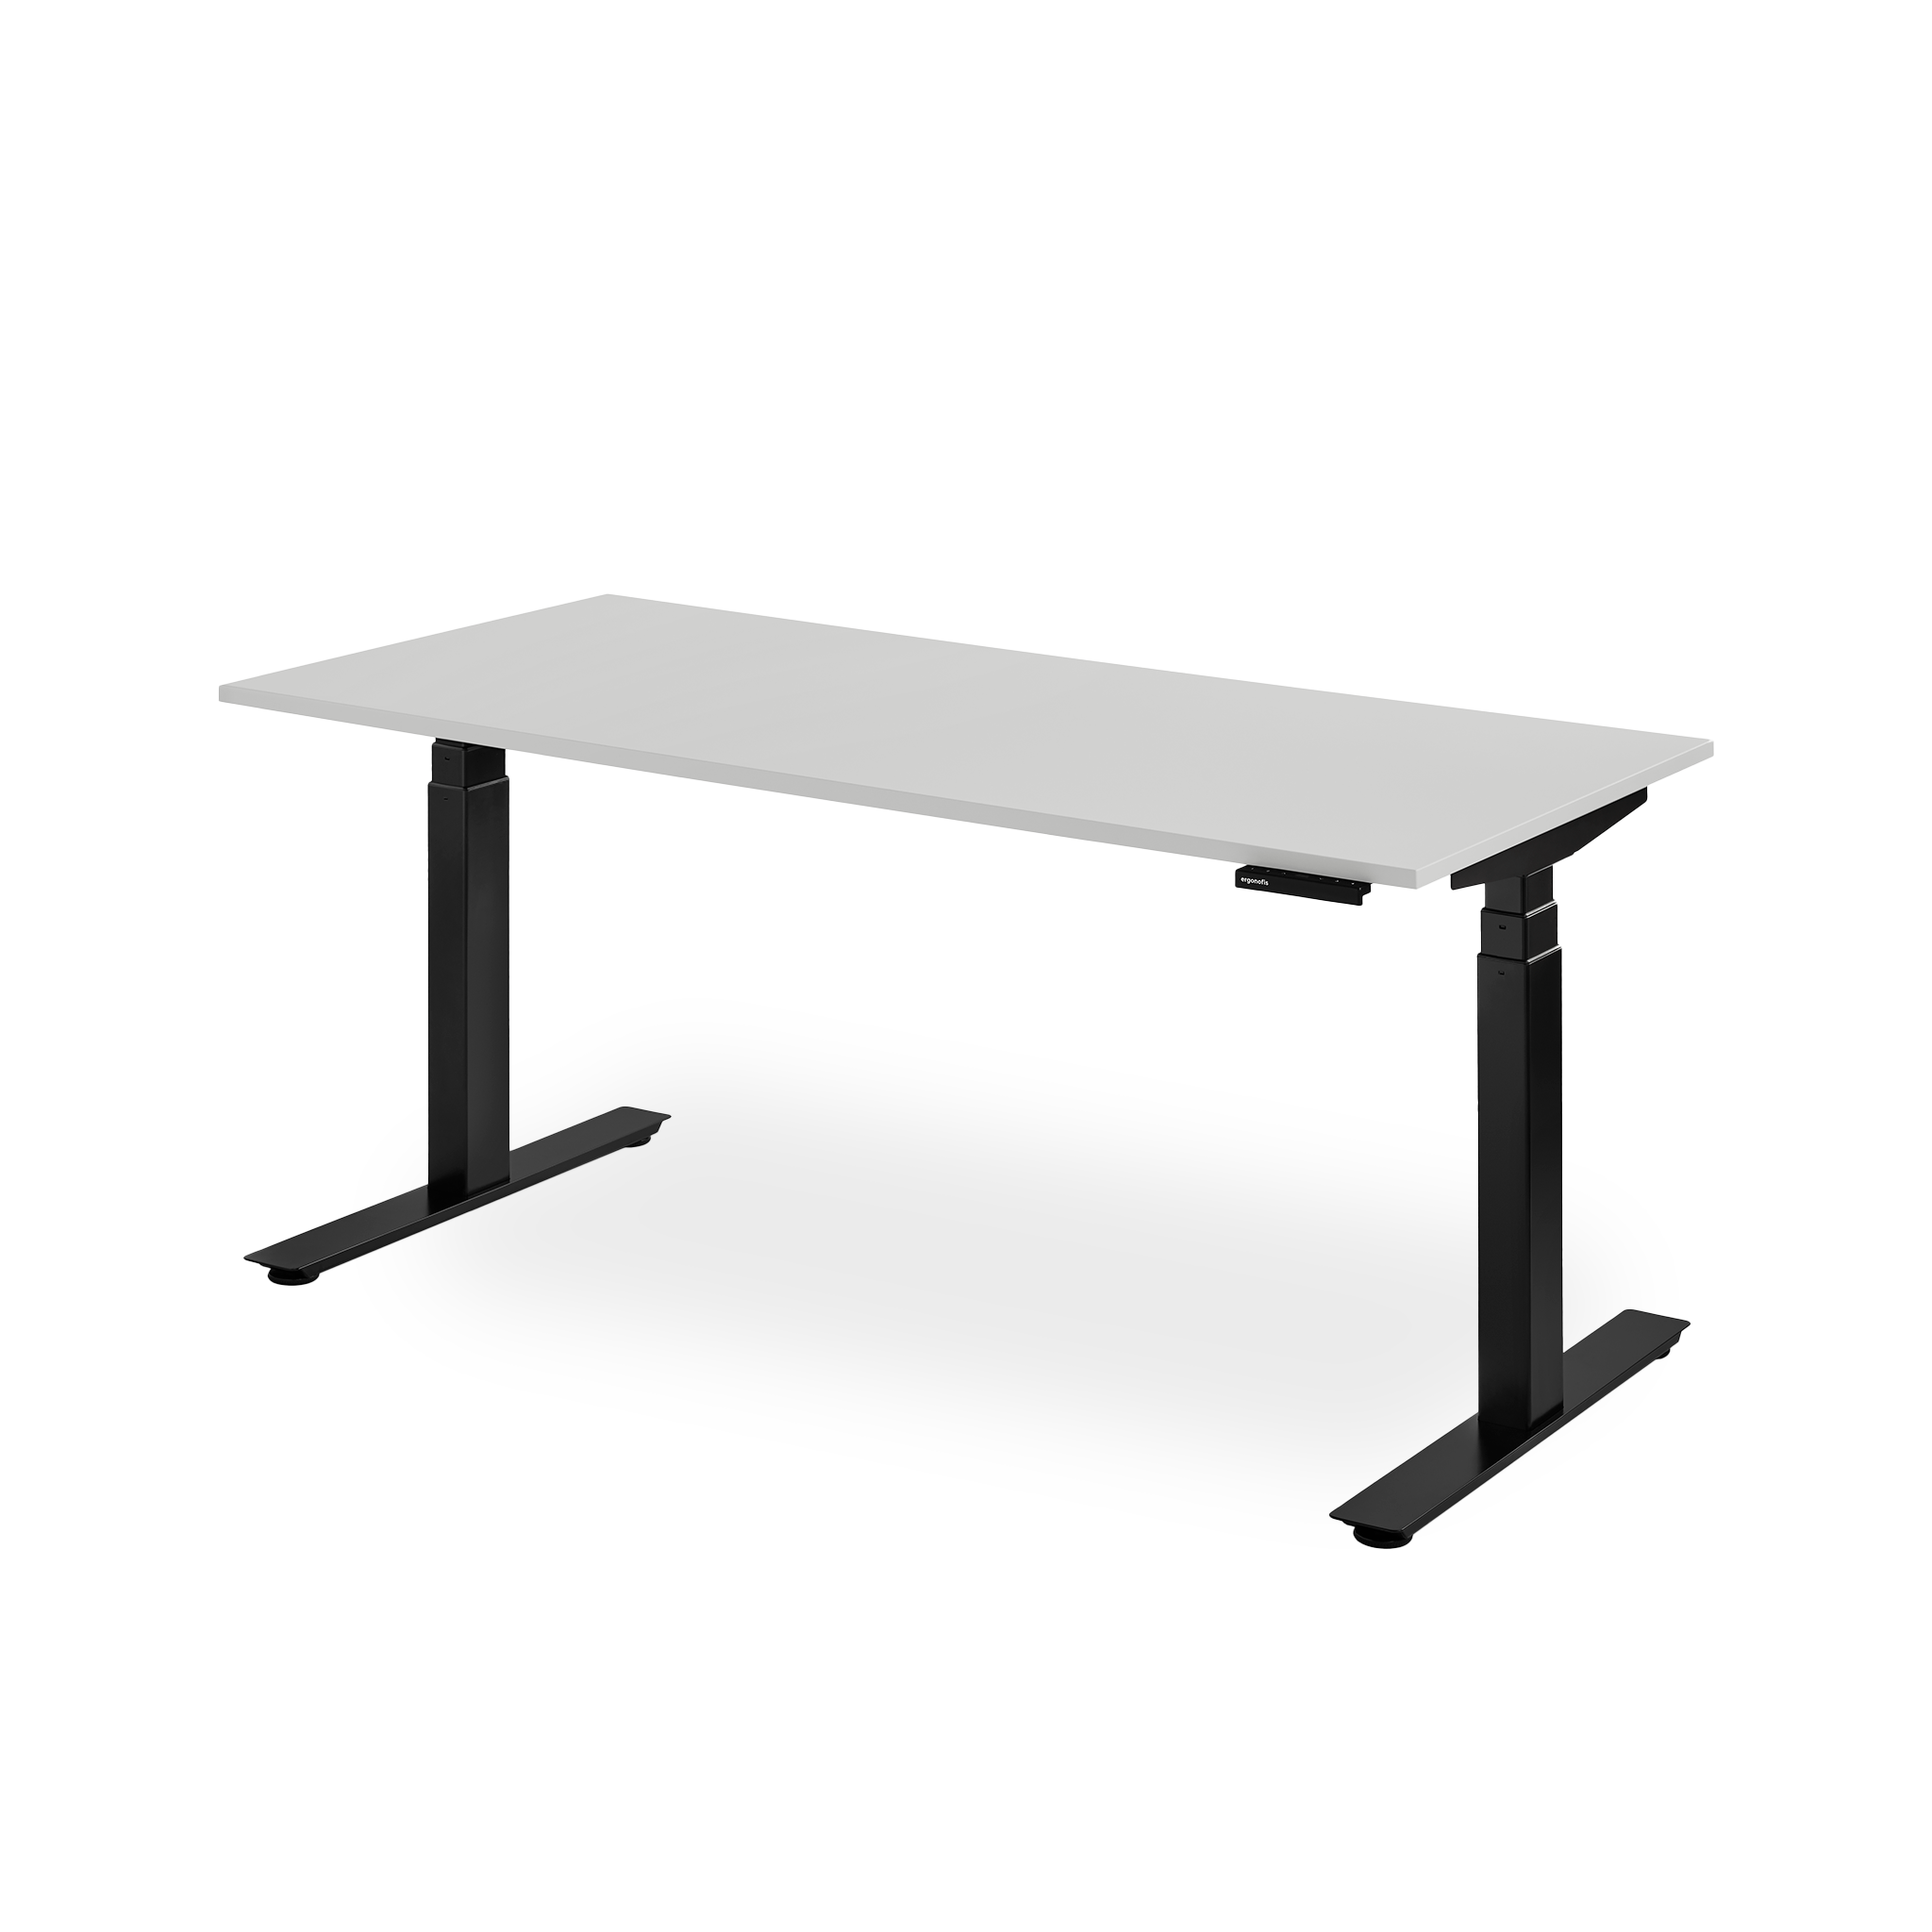 Ergonomic Standing Desk: Shop the Shift Desk